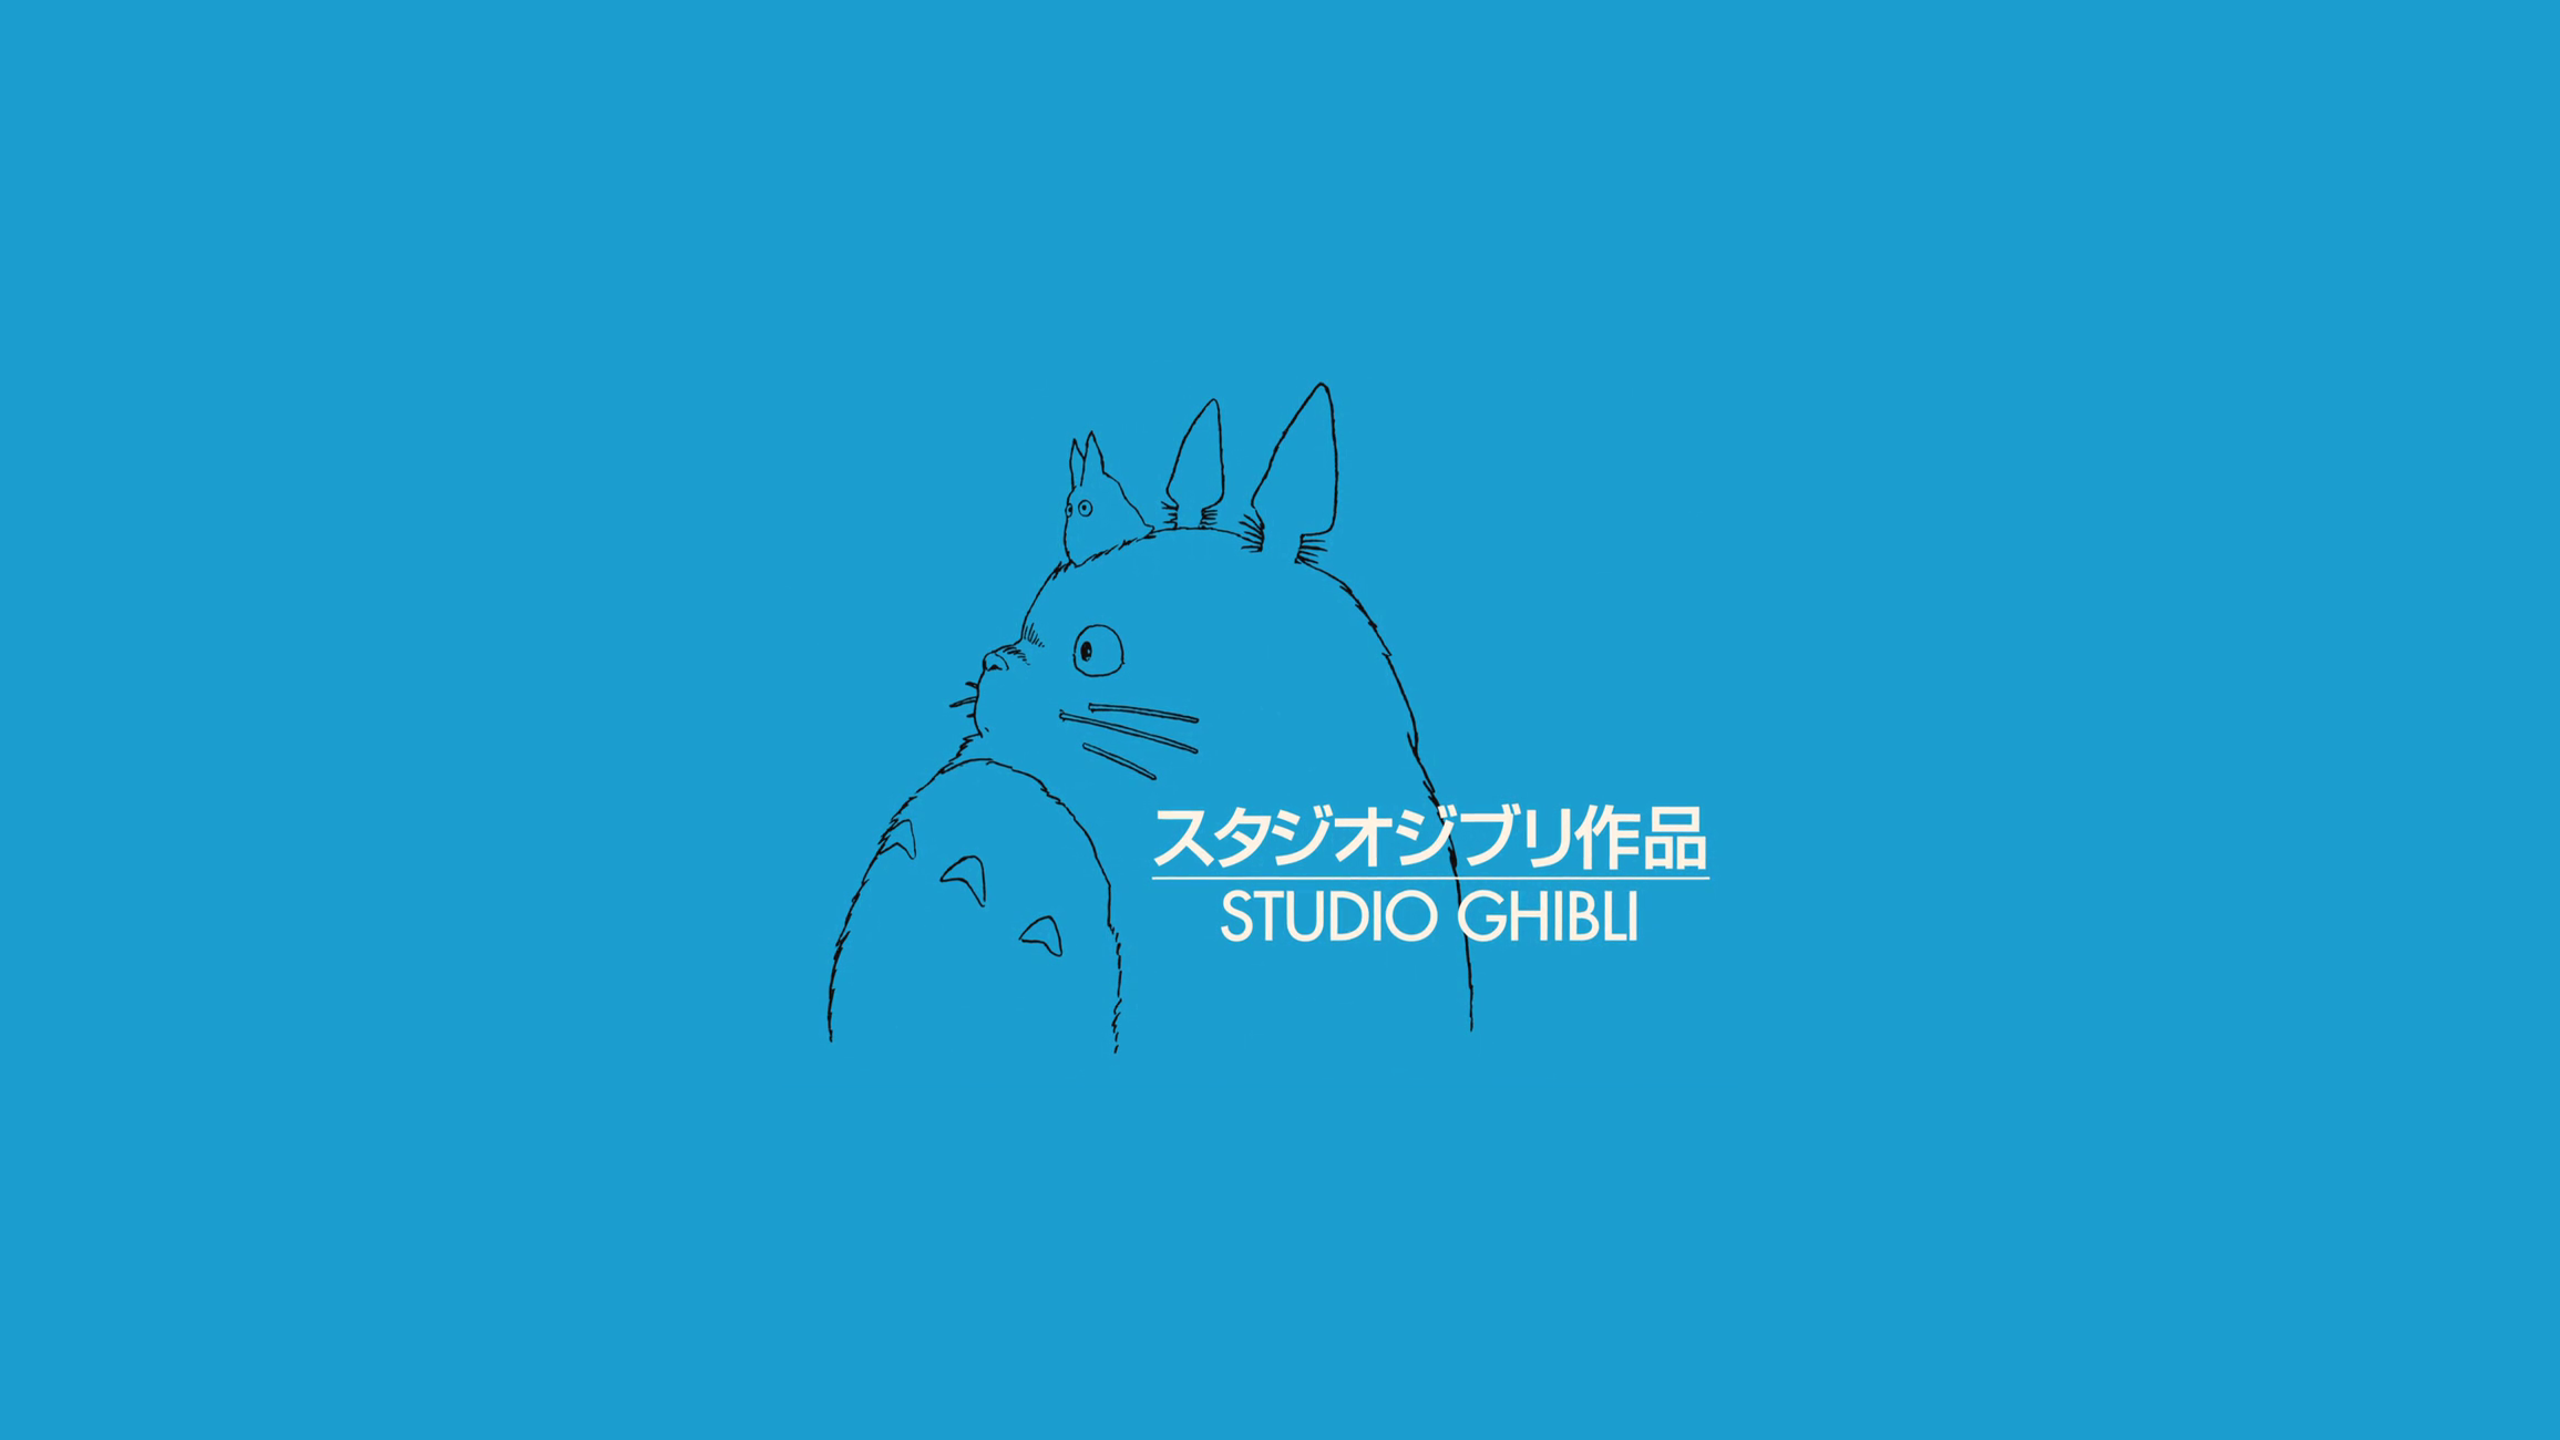 General 2560x1440 Studio Ghibli anime minimalism blue blue background simple background